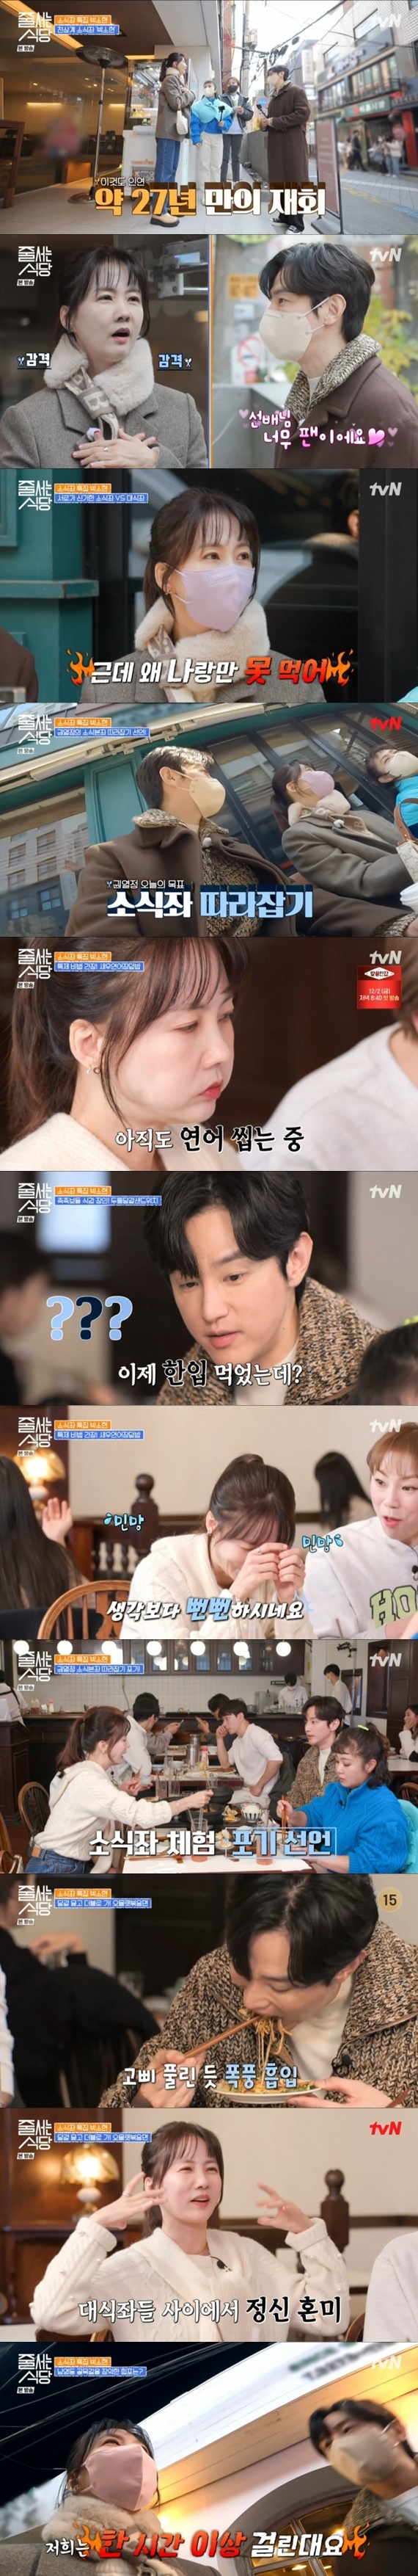 tvN '줄 서는 식당' 캡처